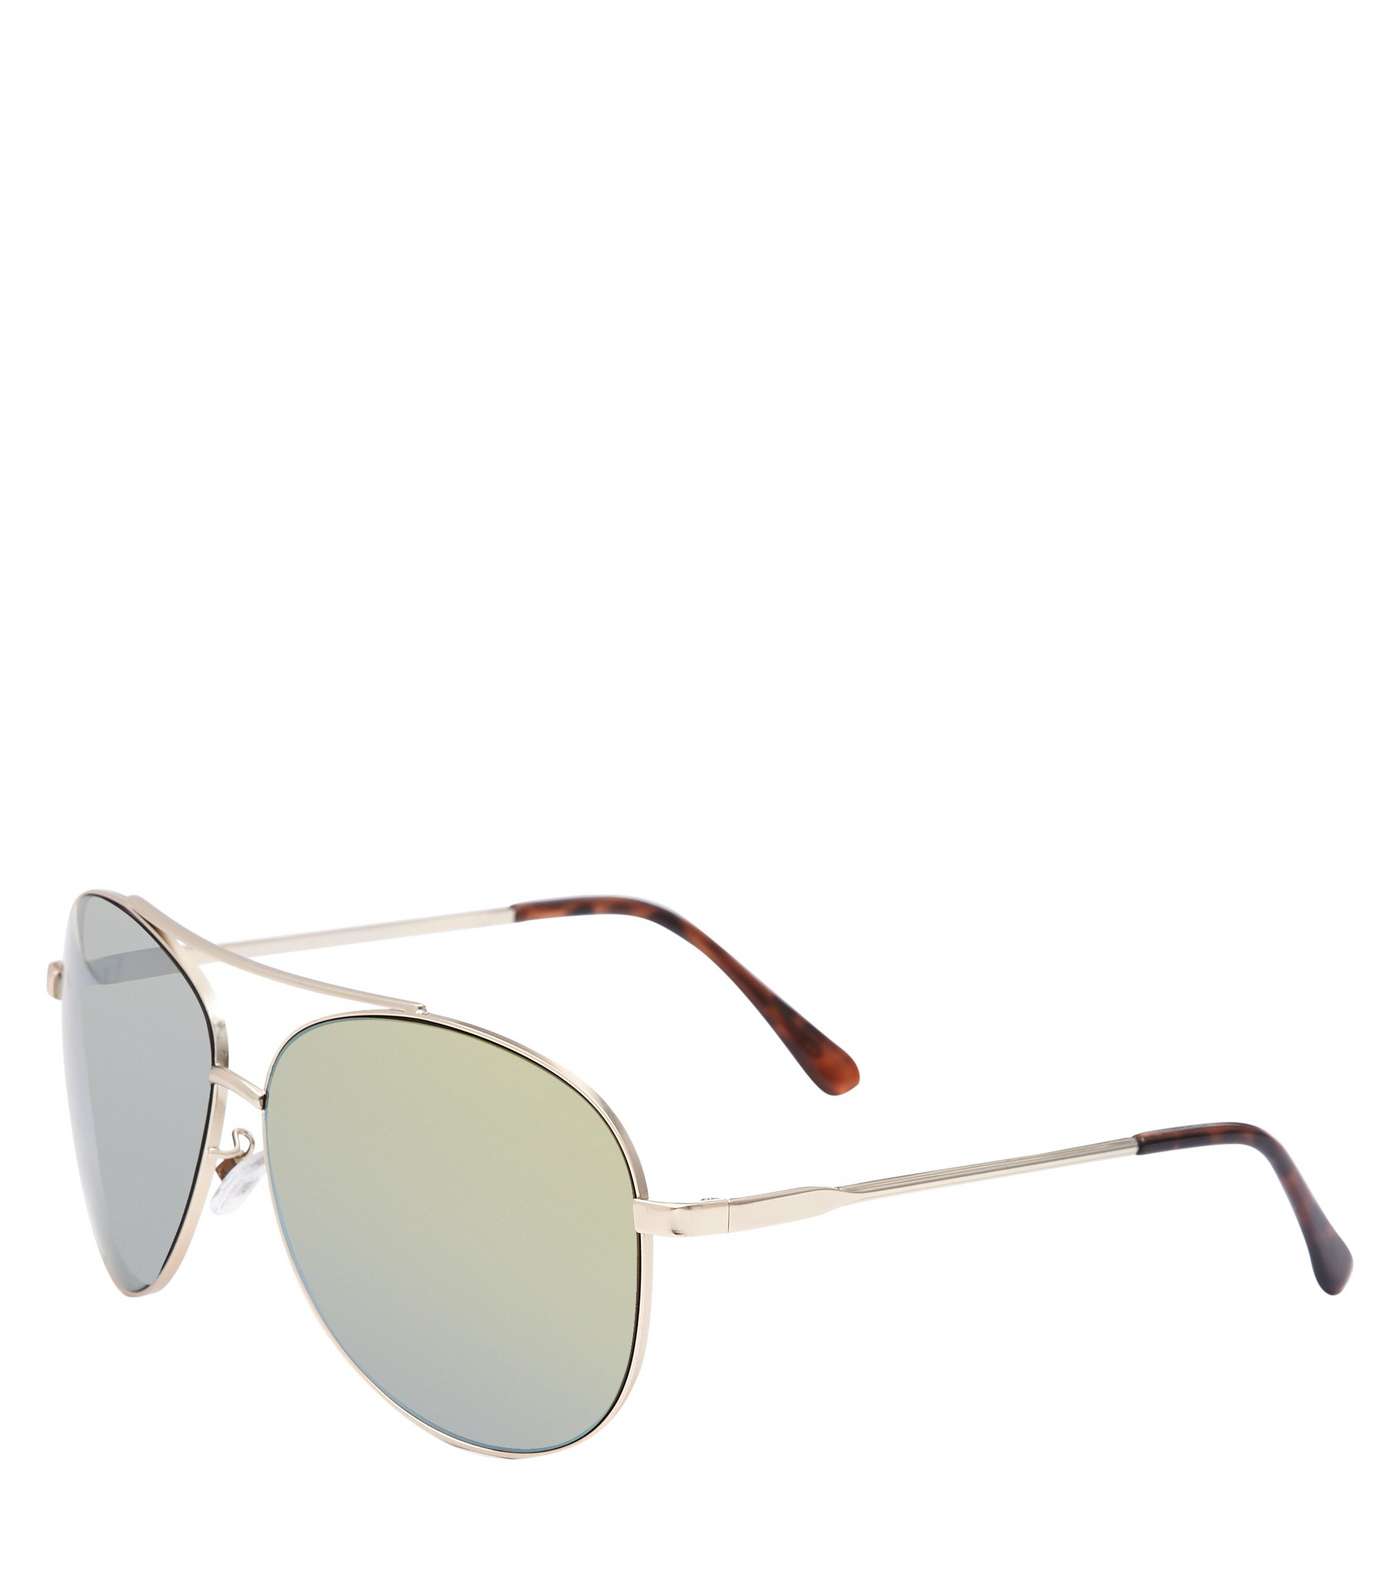 Gold Mirrored Pilot Sunglasses Image 2